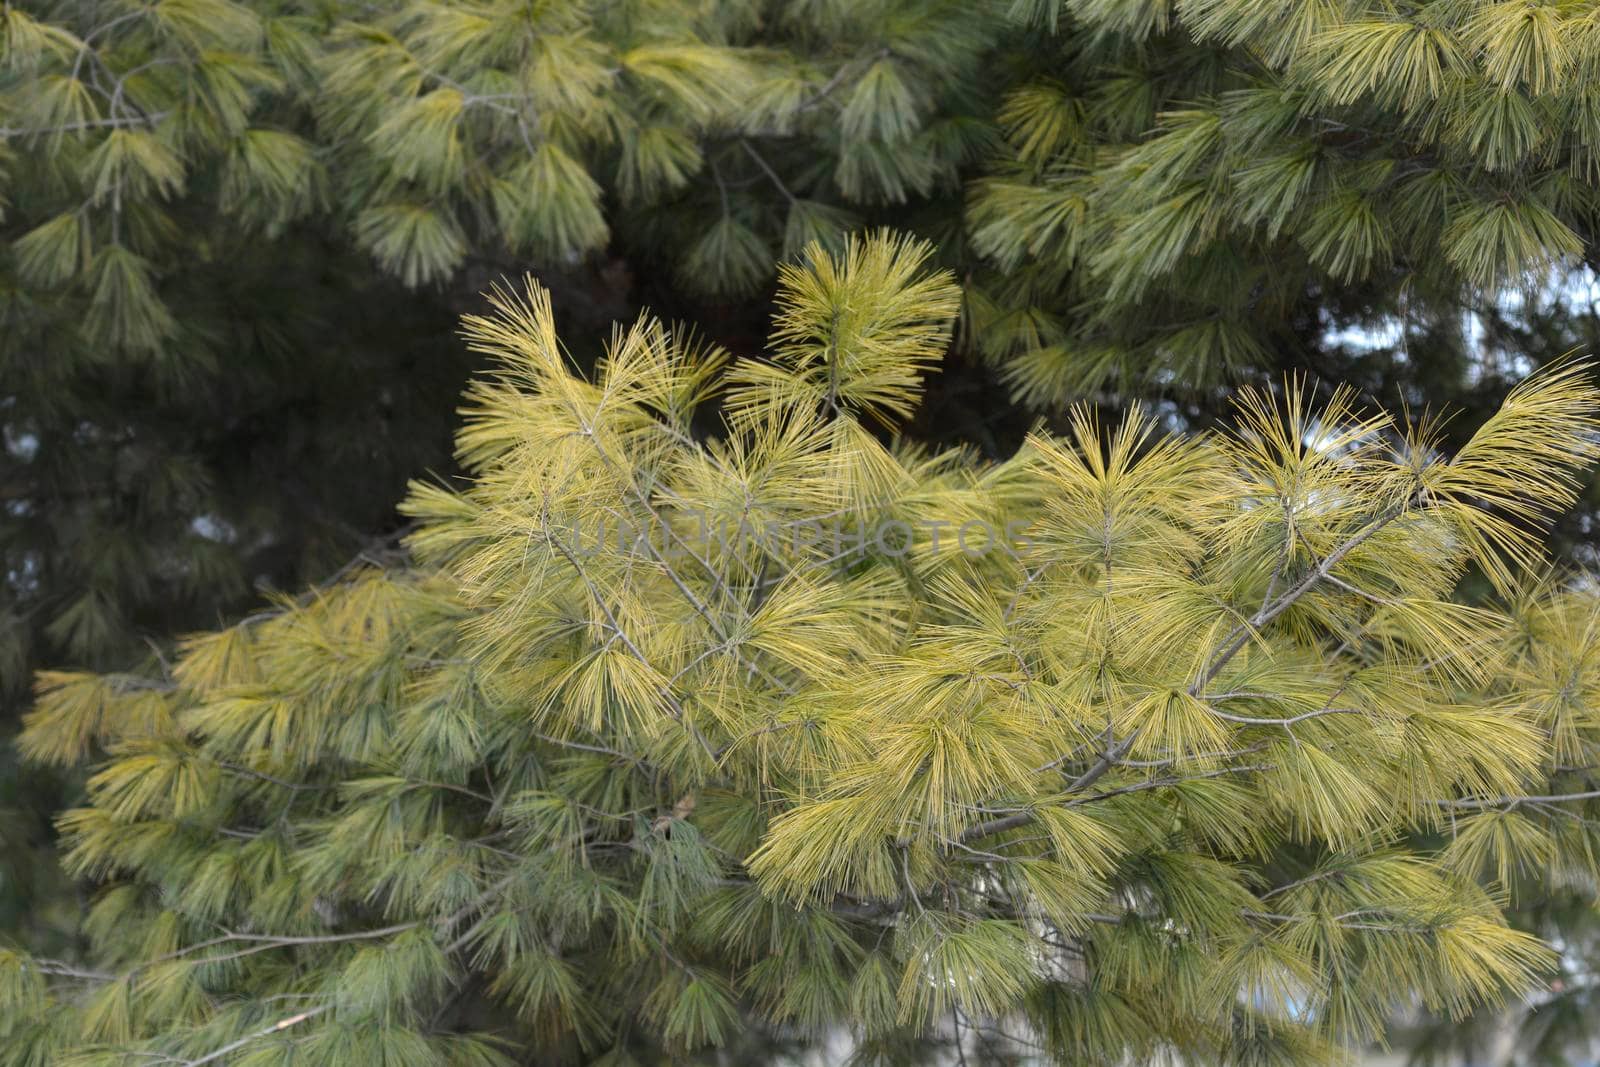 Eastern white pine by nahhan